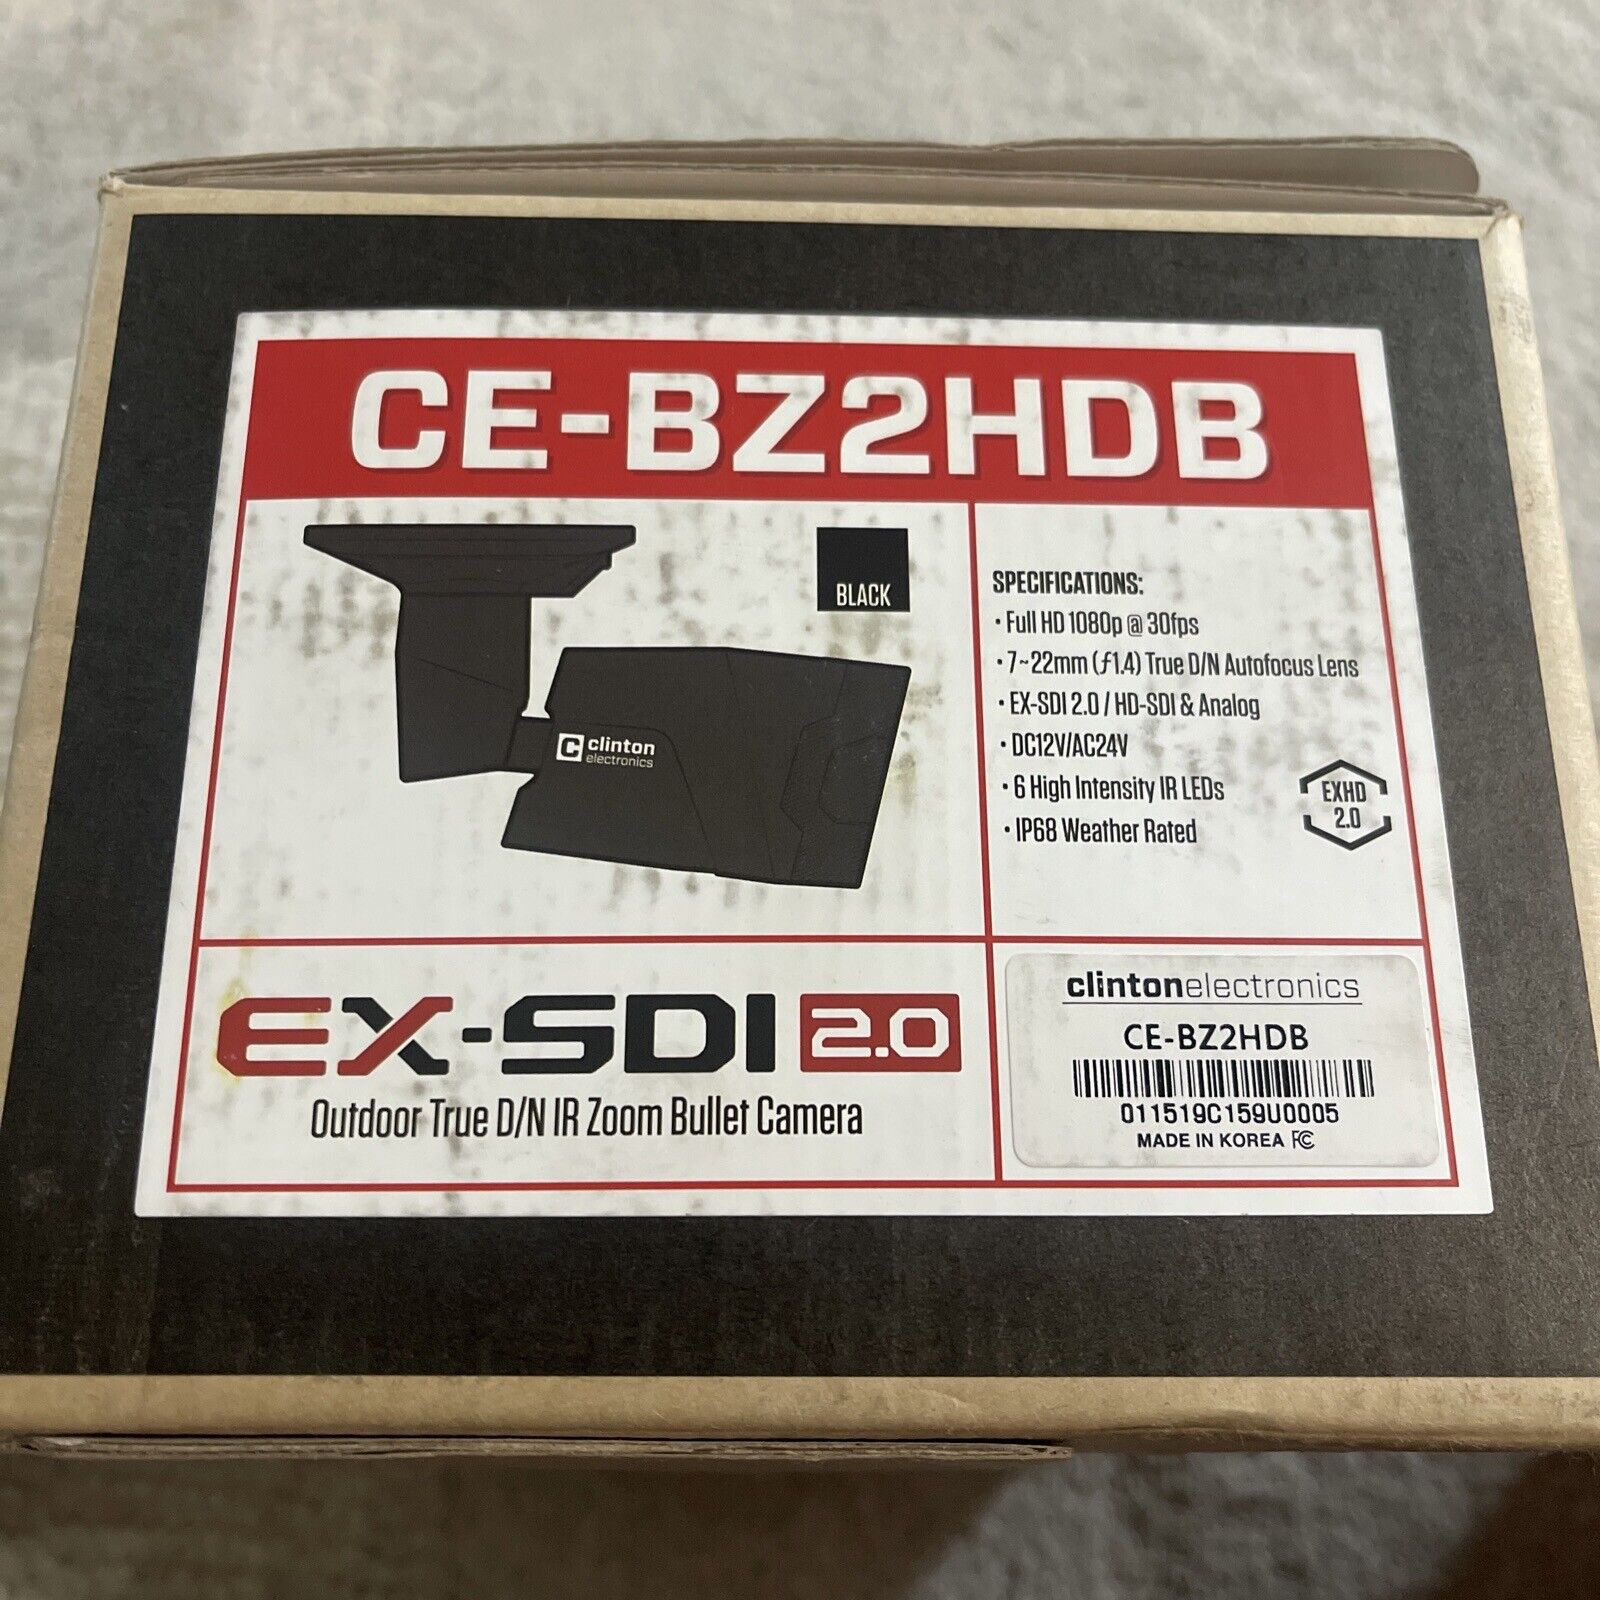 Clinton Electronics BZ Outdoor Bullet Camera: CE-BZ2HDB EX-SDI & HD-CVI/TVI/AHD